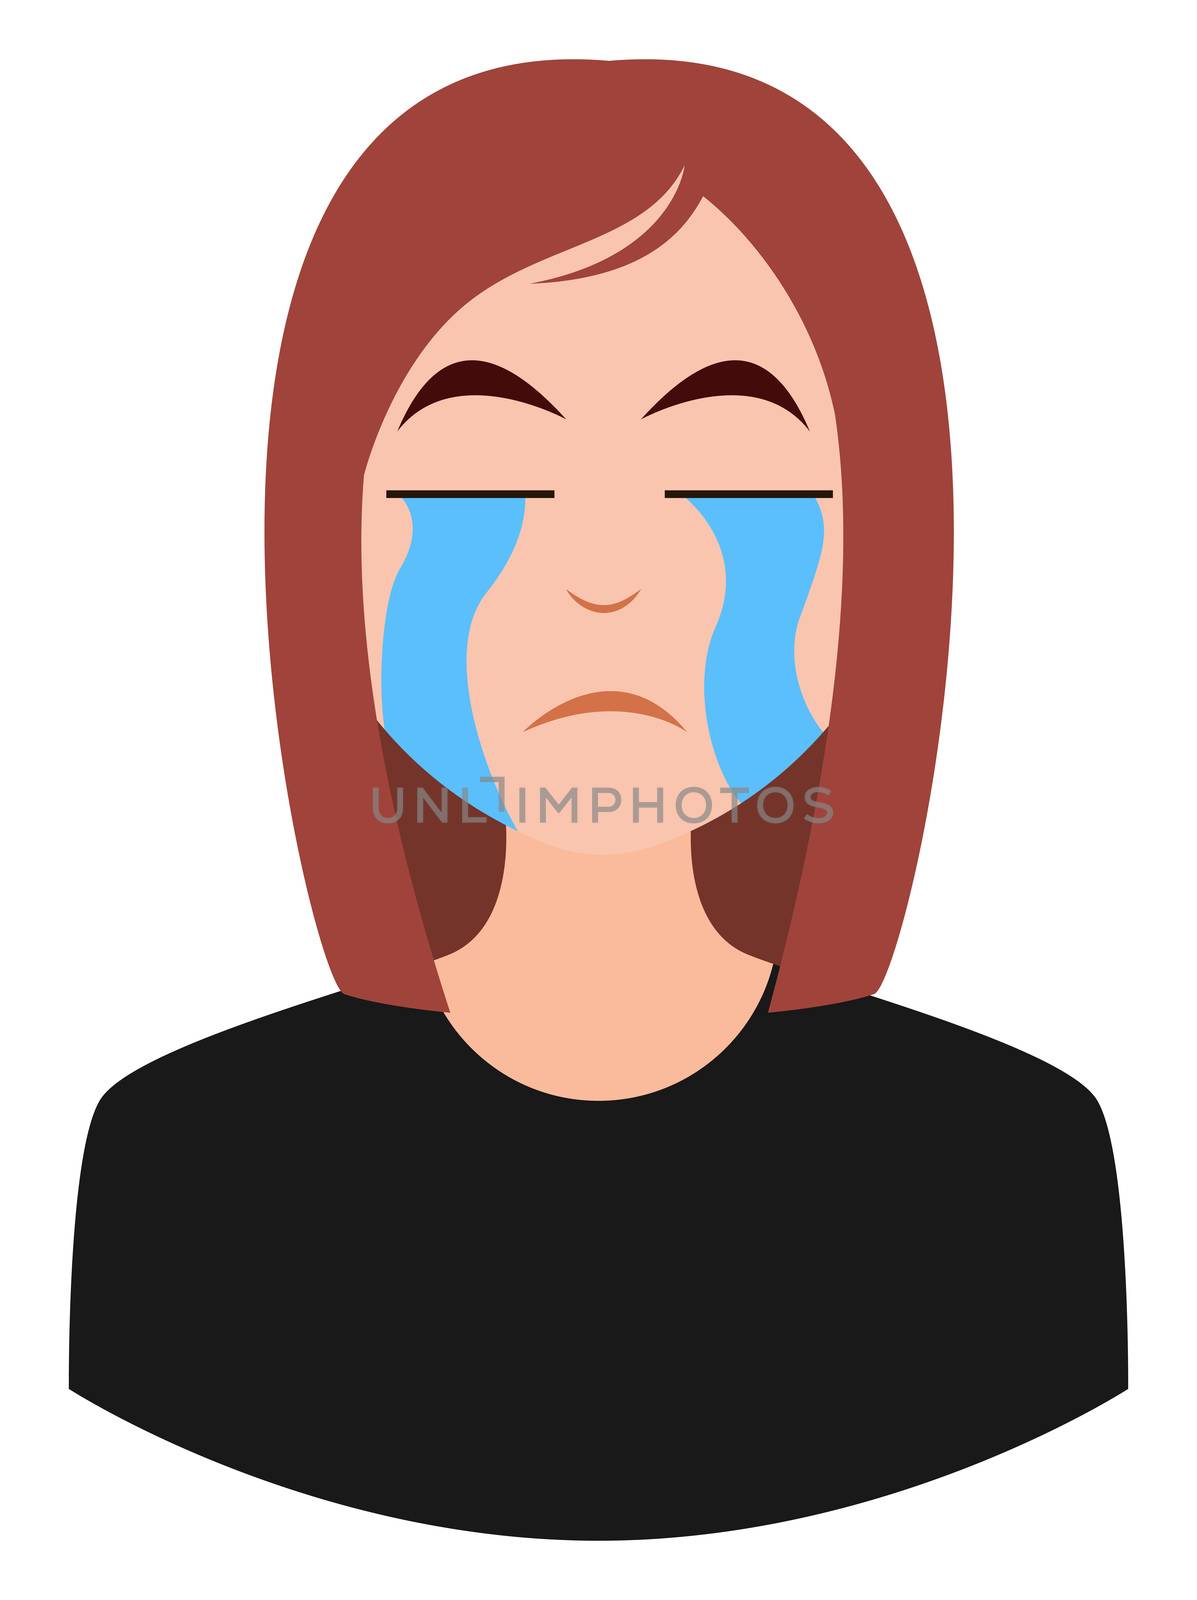 Crying girl emoji, illustration, vector on white background